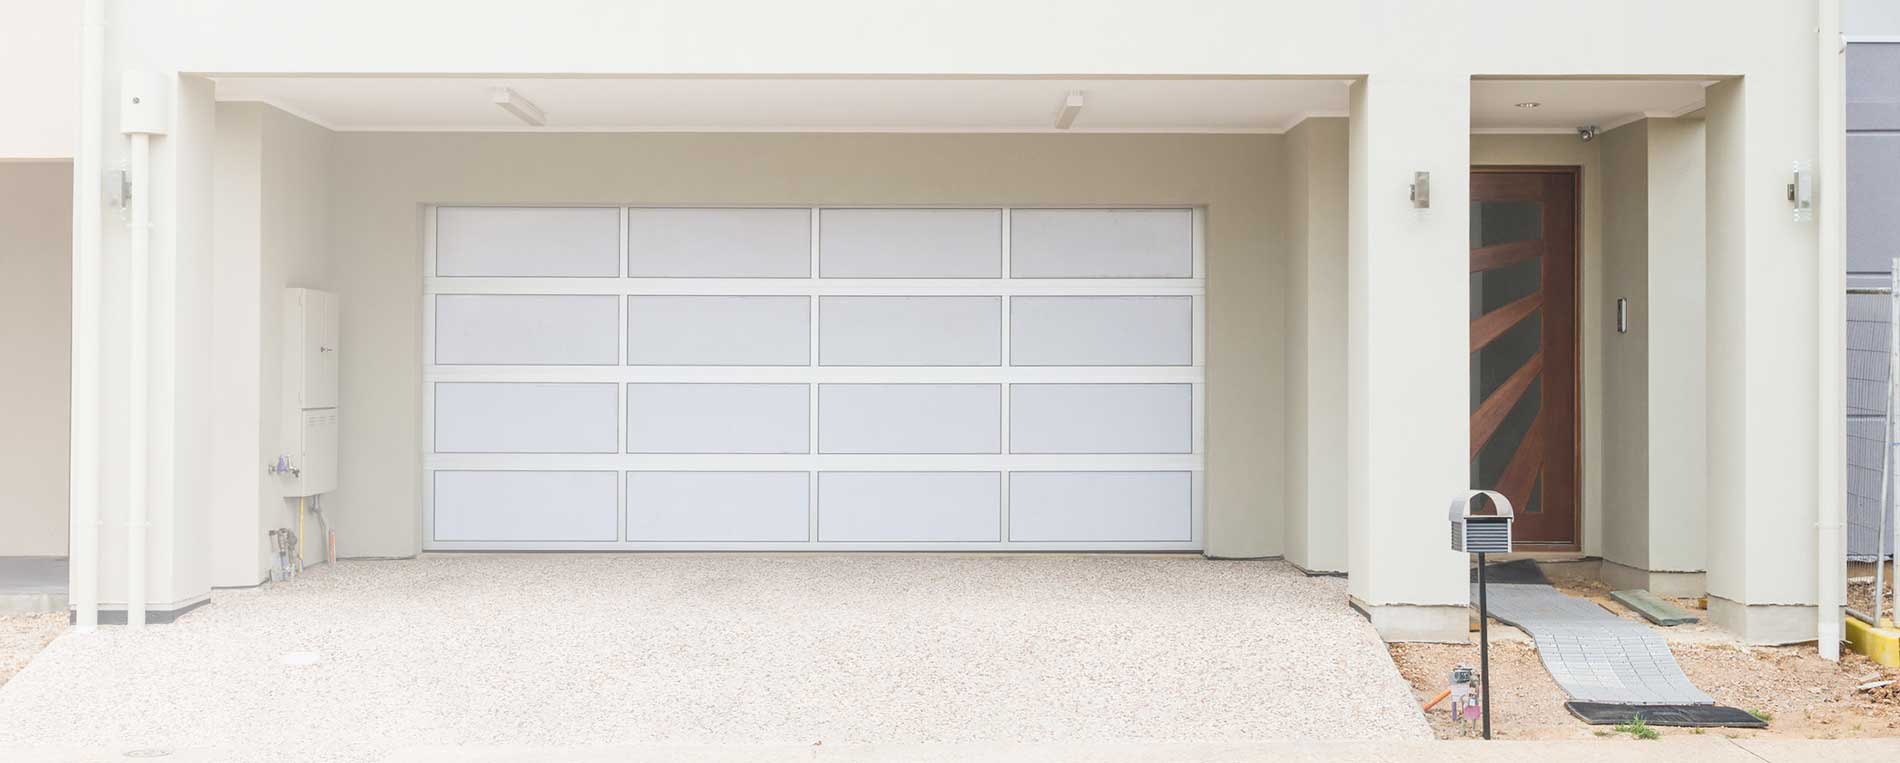 New Garage Door Installation In Layton